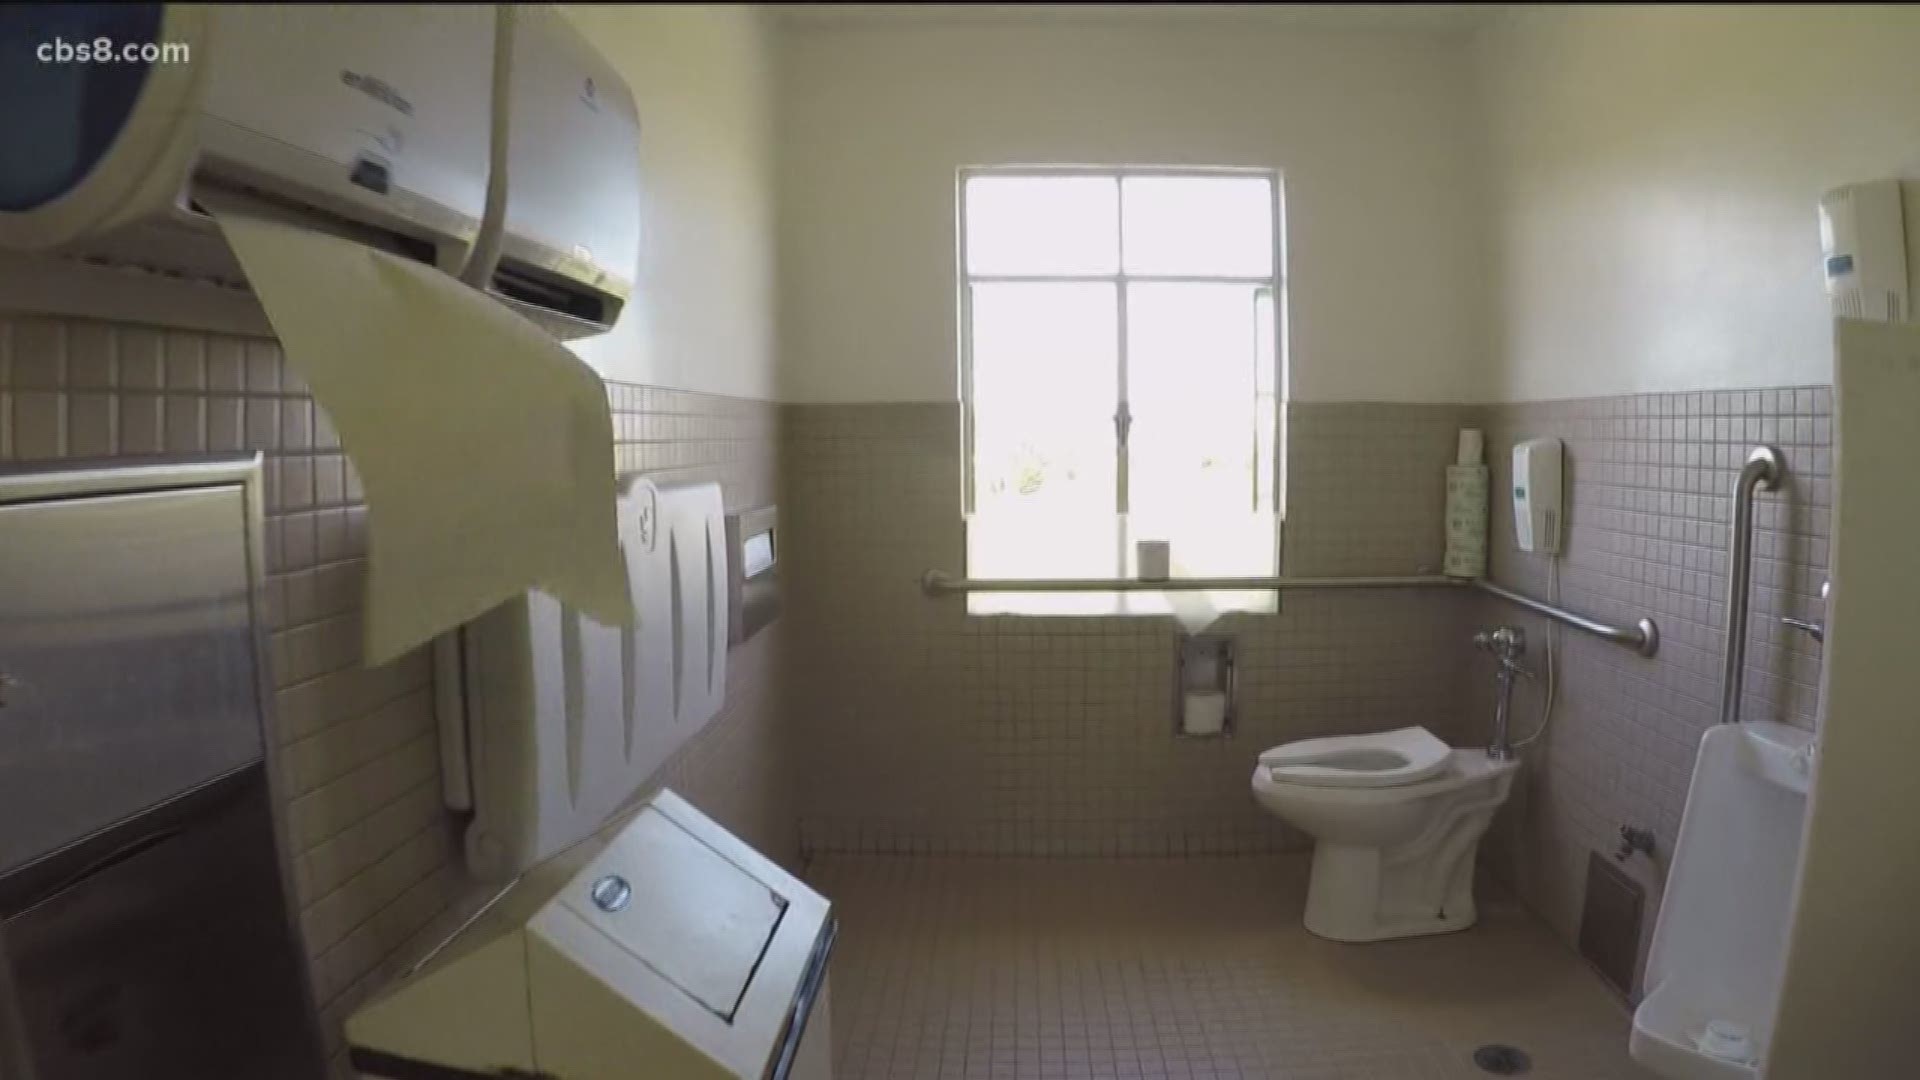 San Diego's Balboa Park Golf Course has a bathroom with the best views.